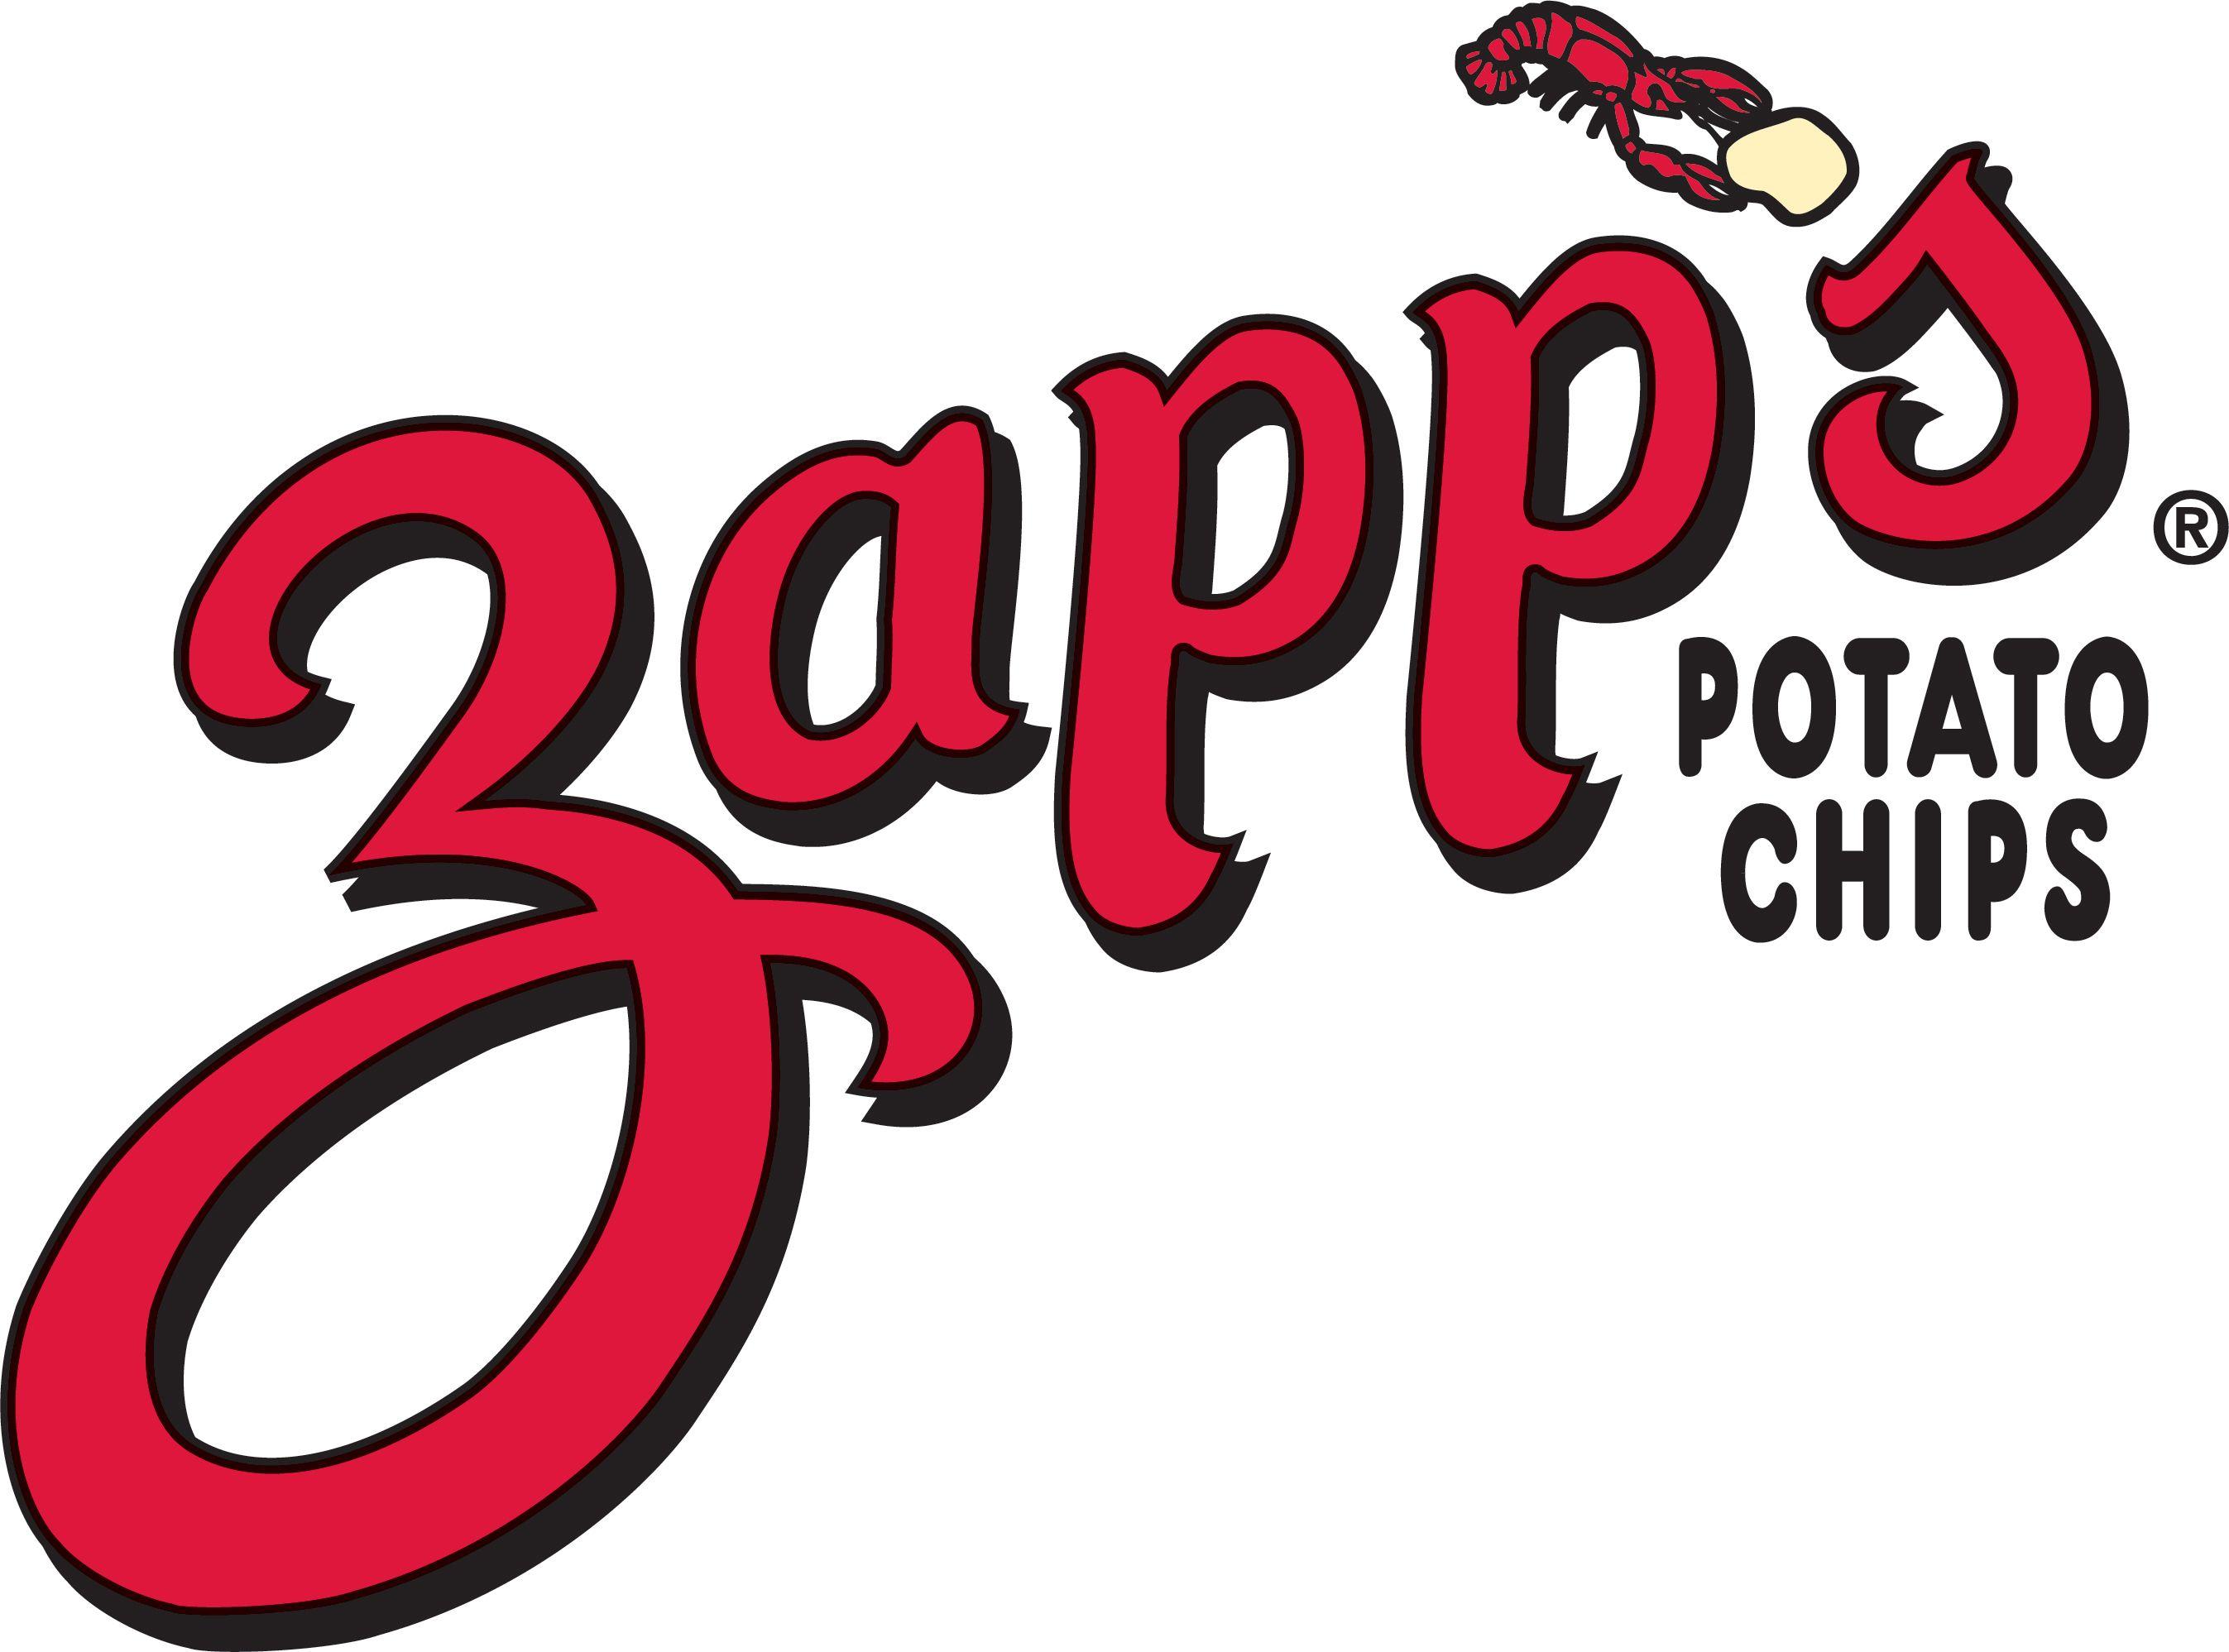 Zapp's Logo - Celebrate The Flavors of Mardi Gras | Business Wire